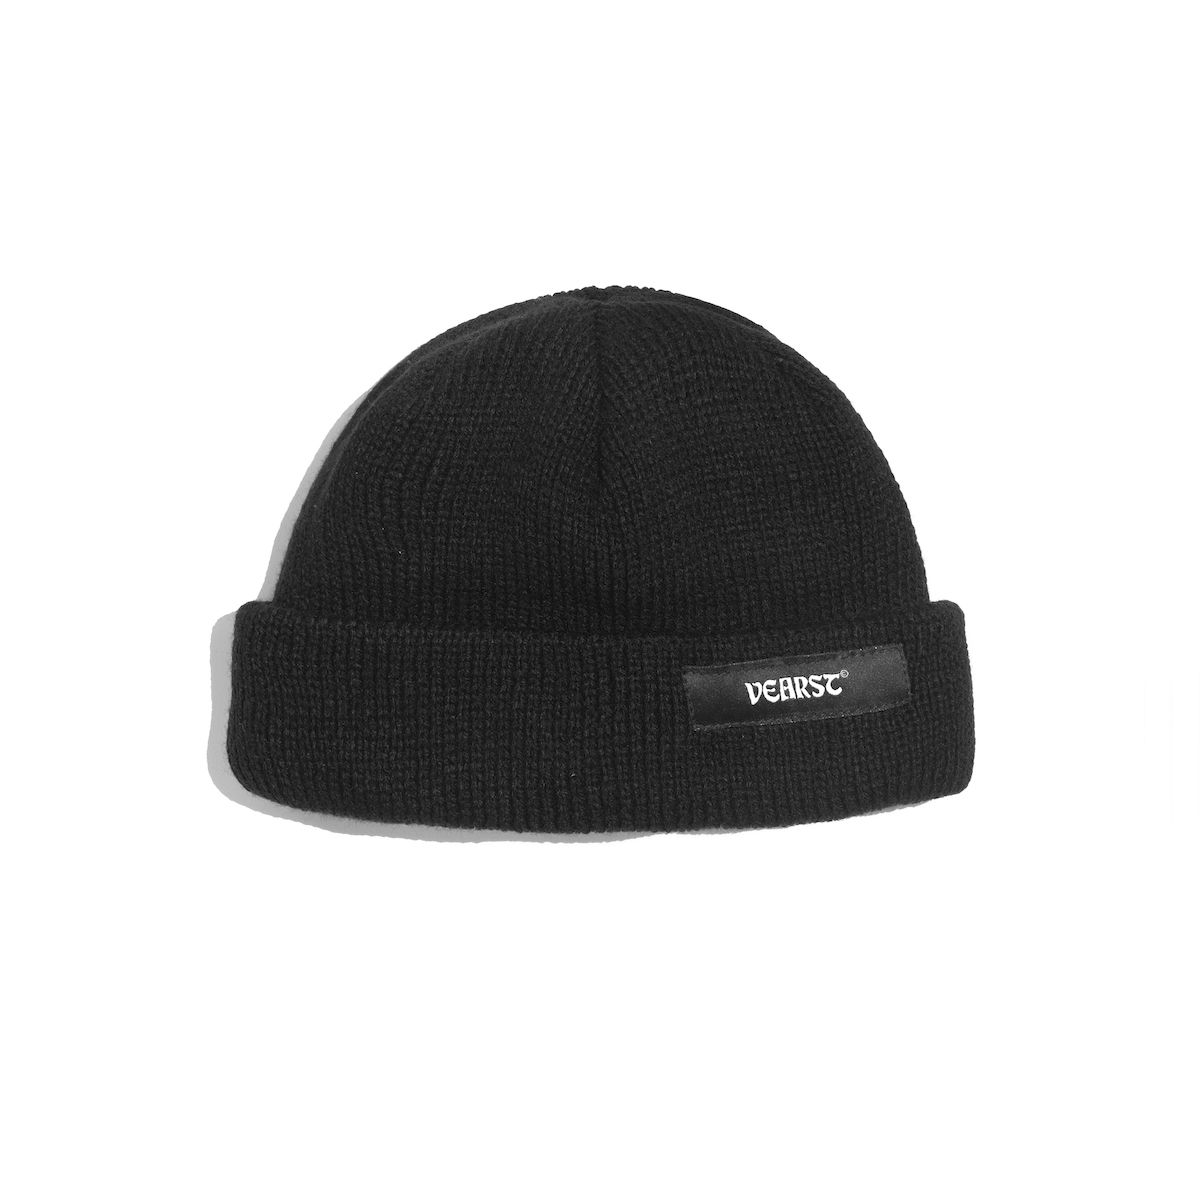 Minks Black Beanie Hat